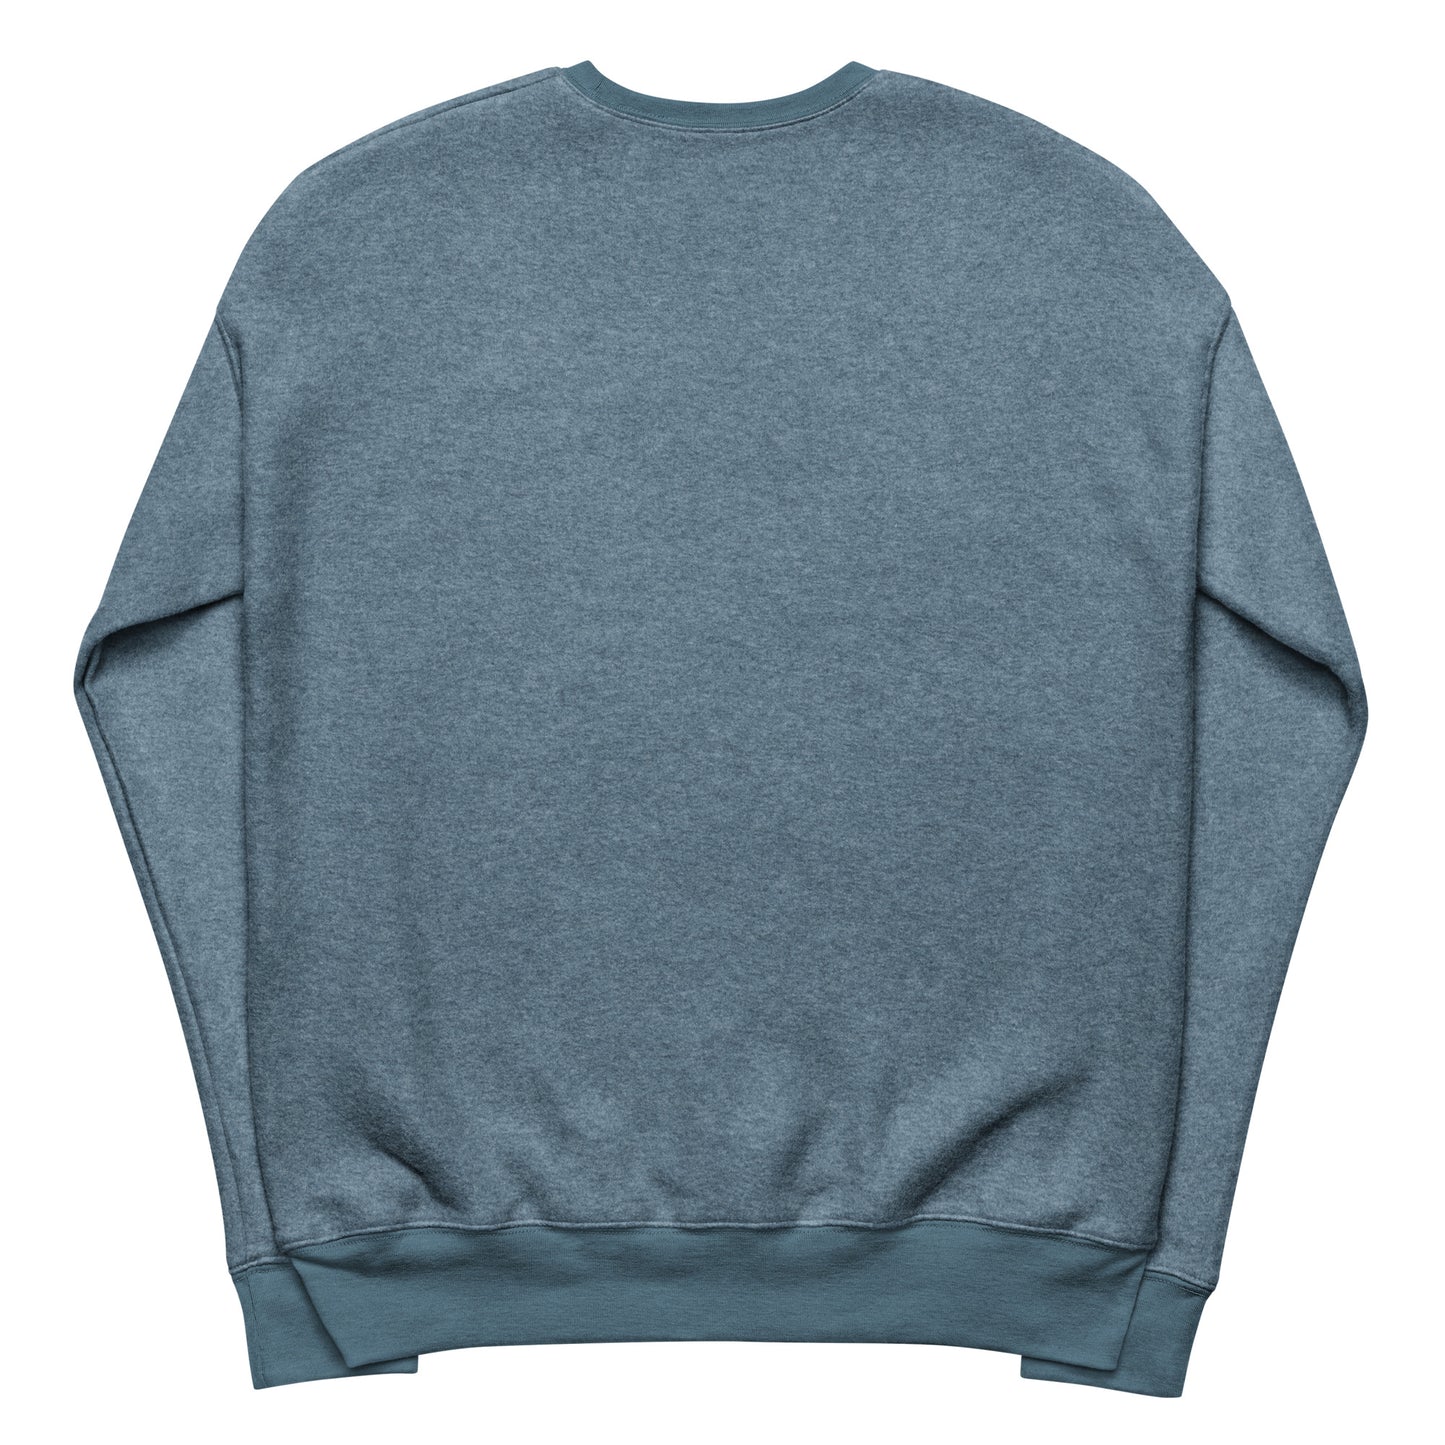 The Sideline Project Unisex Sueded Fleece Sweatshirt